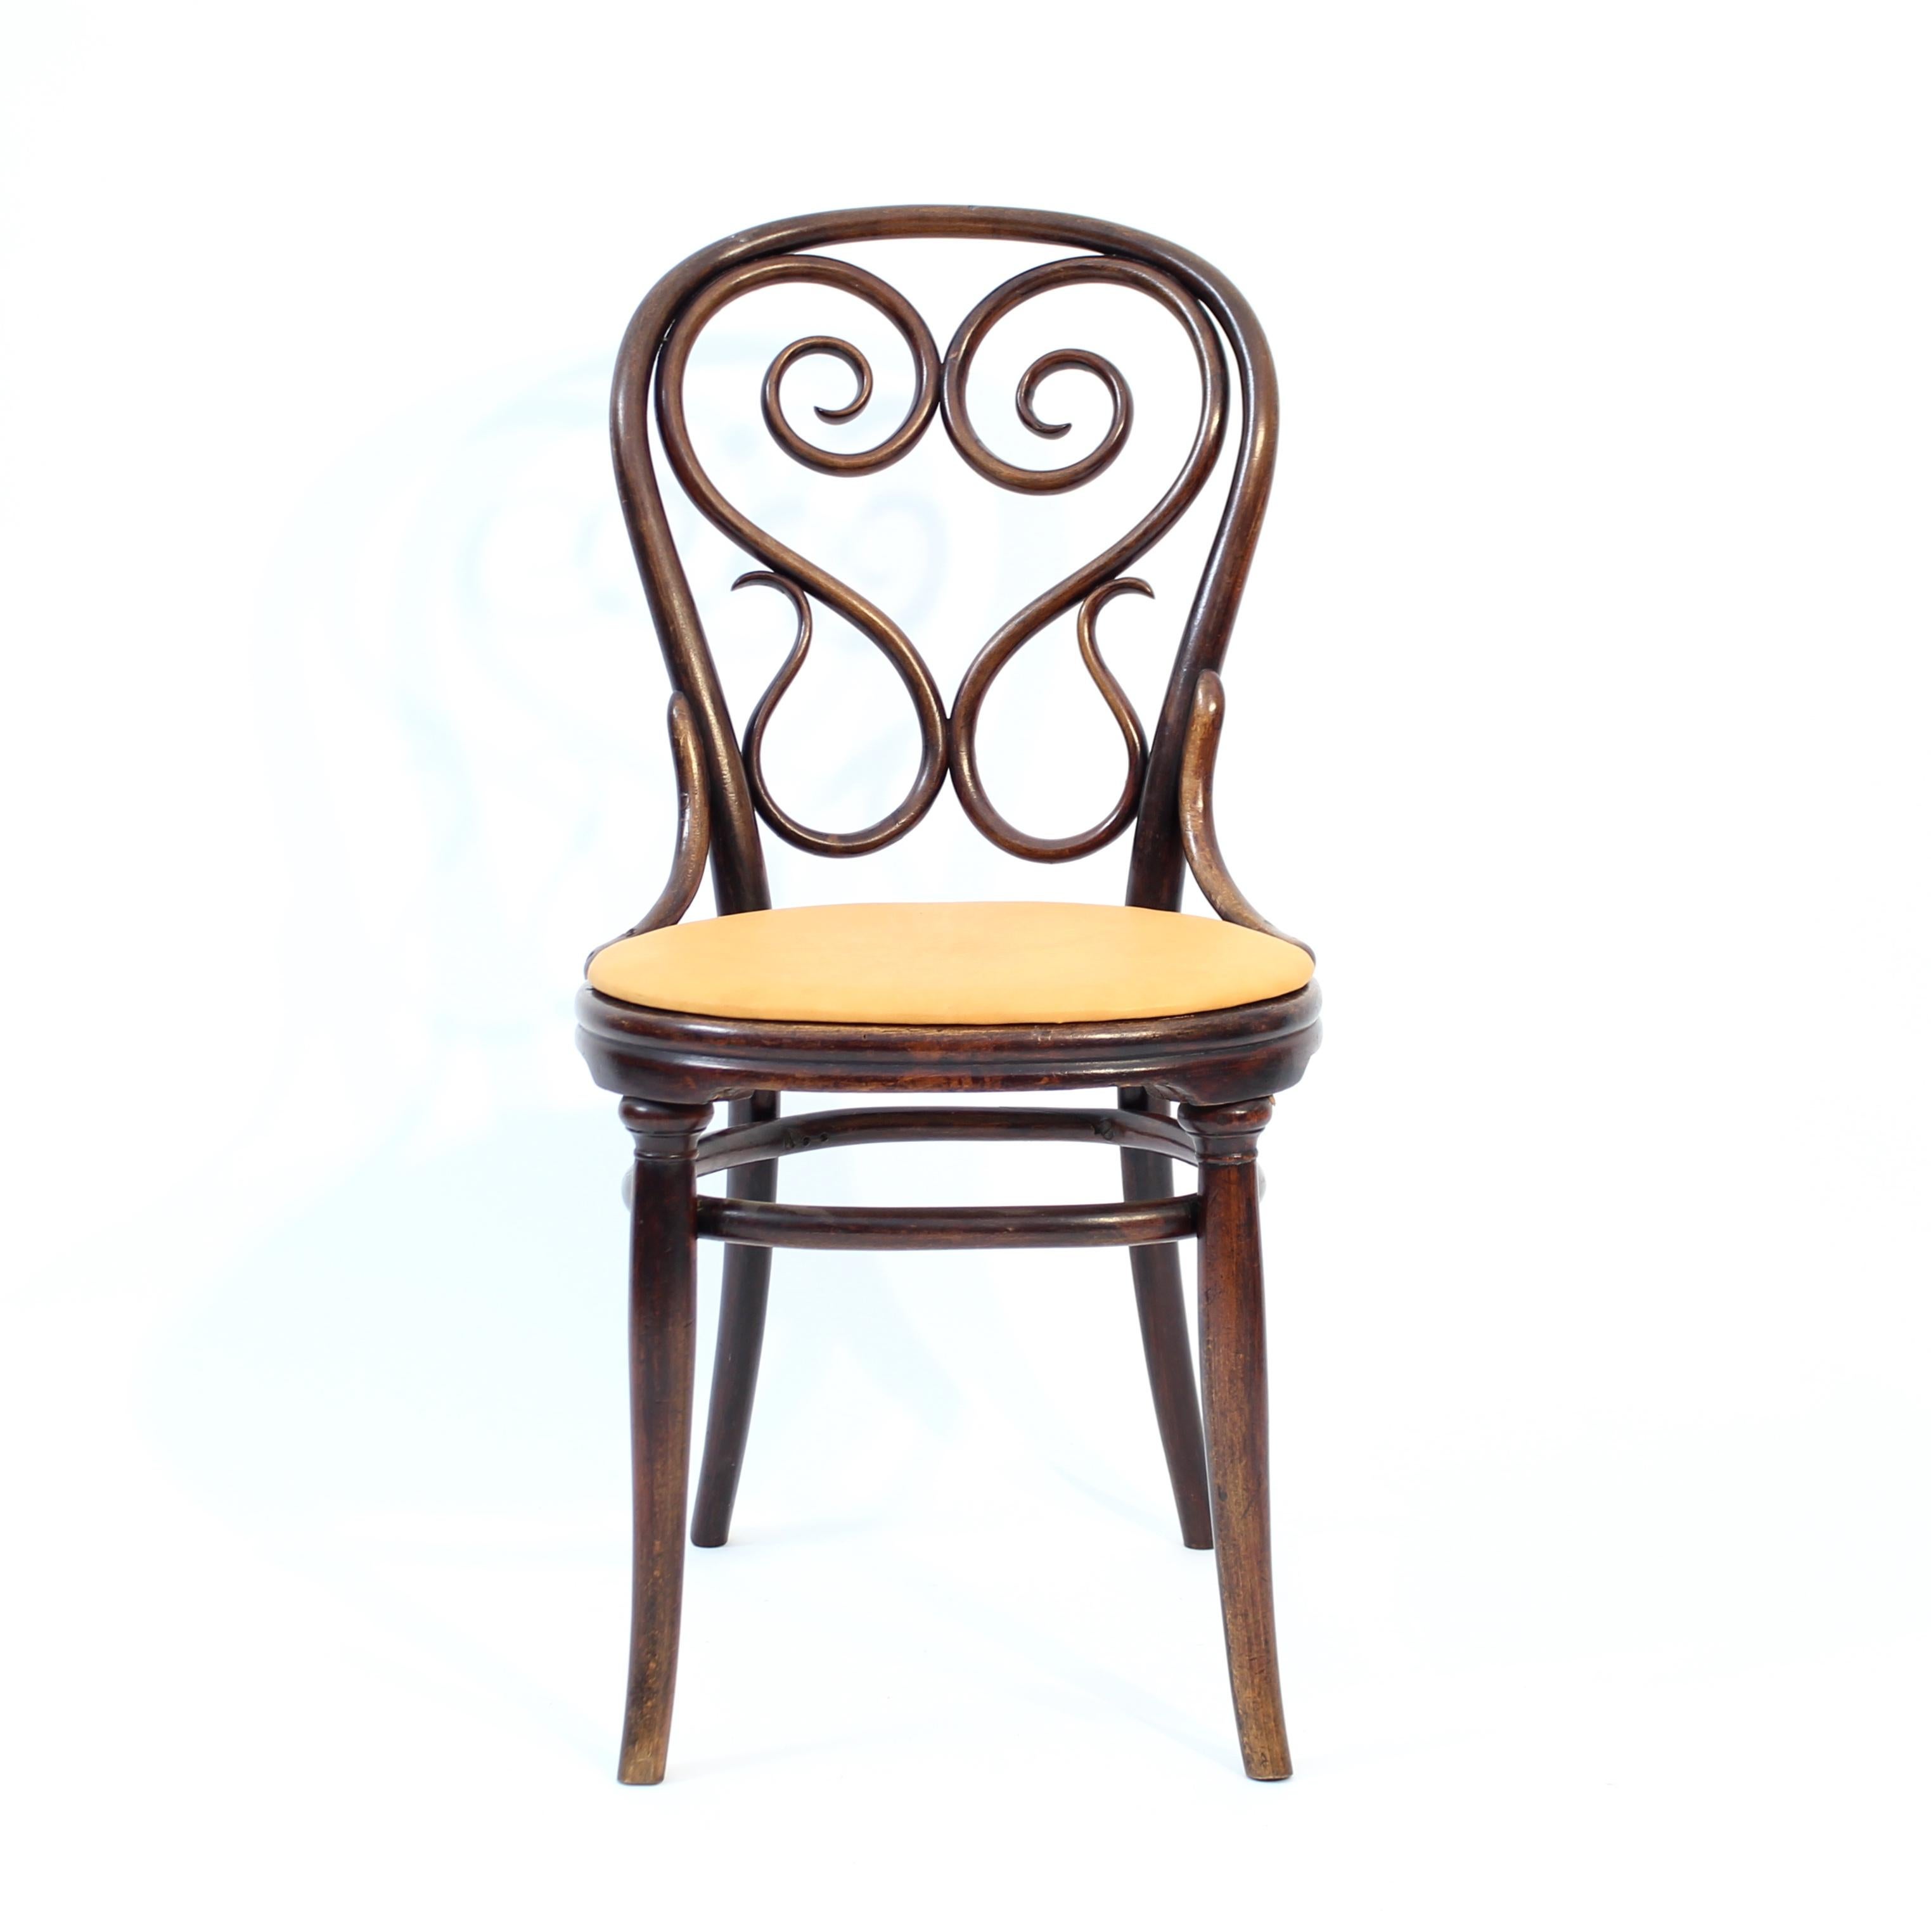 Austrian Michael Thonet, rare set of 4 Café Daum chairs for Thonet, 1849